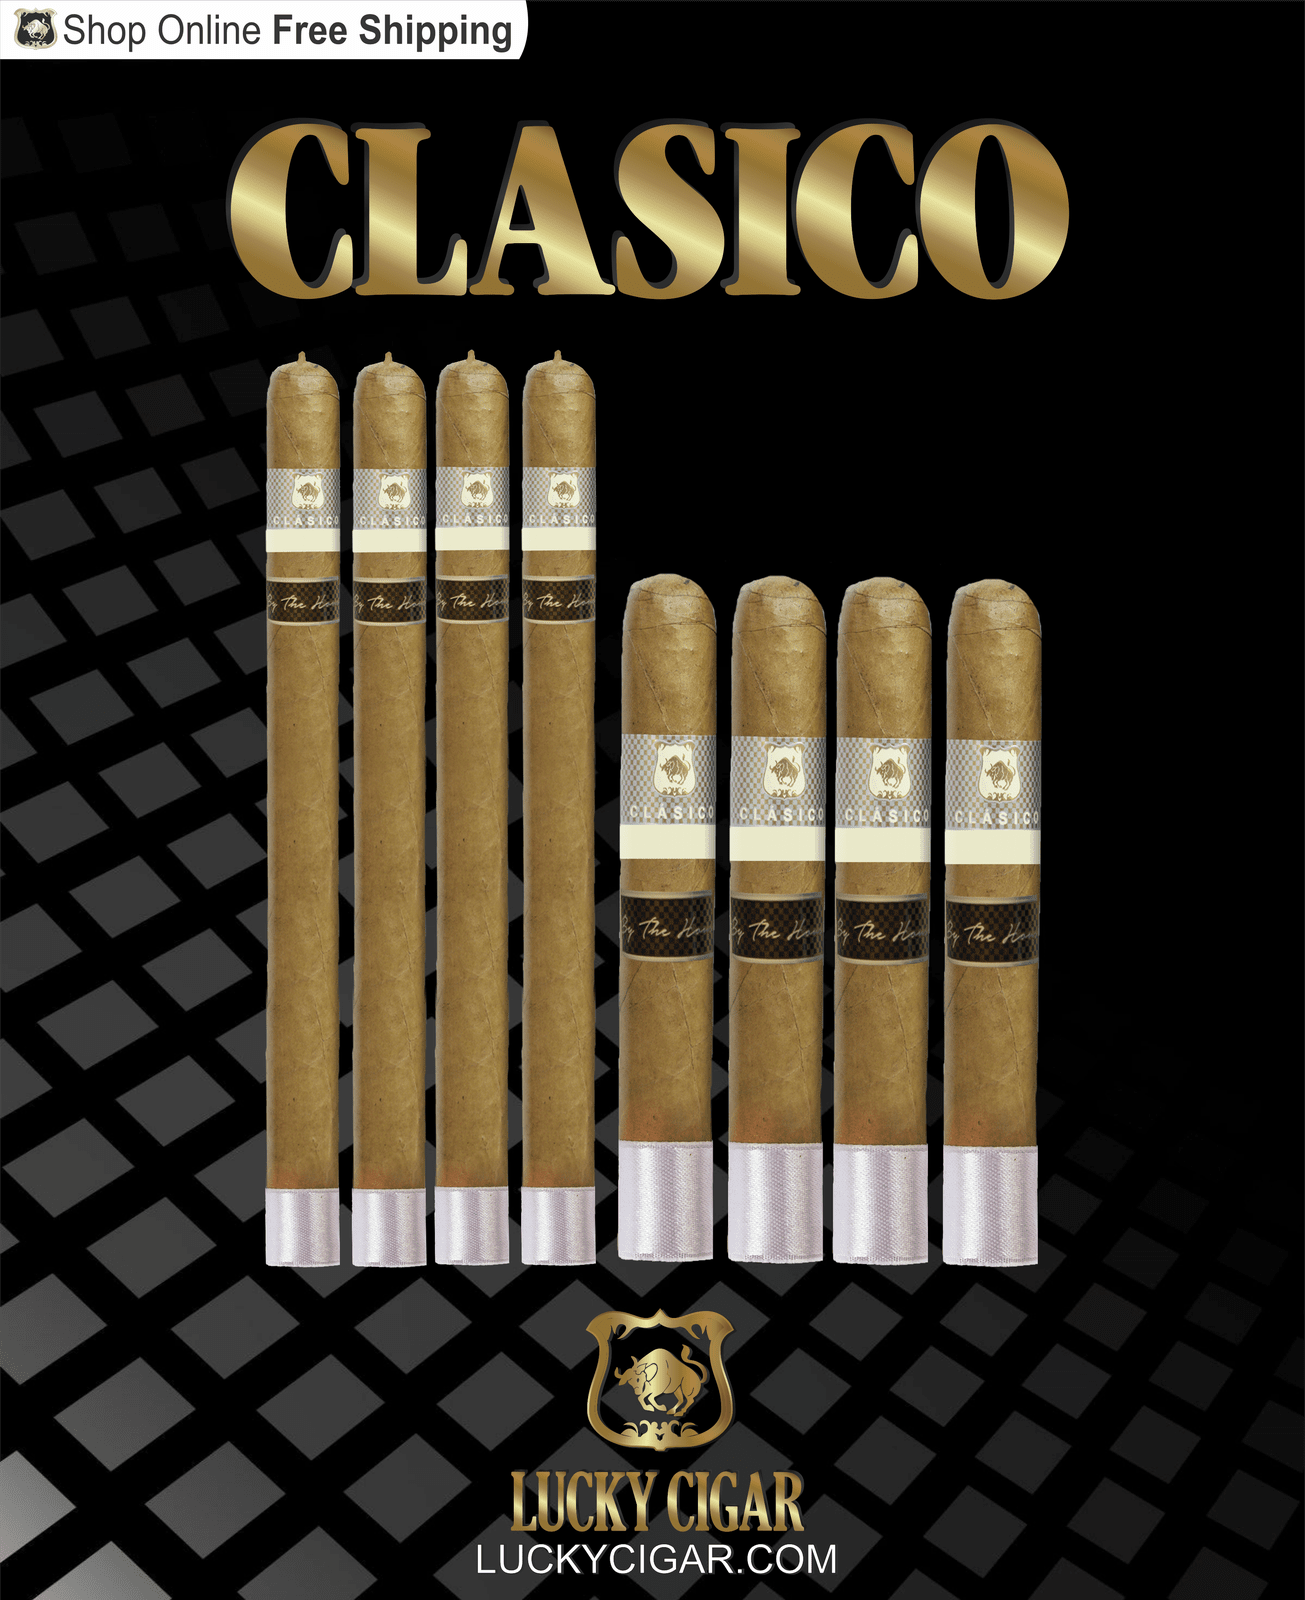 Lucky Cigar Sampler Sets: Set of 8 Classico Lancero and Toro Cigars